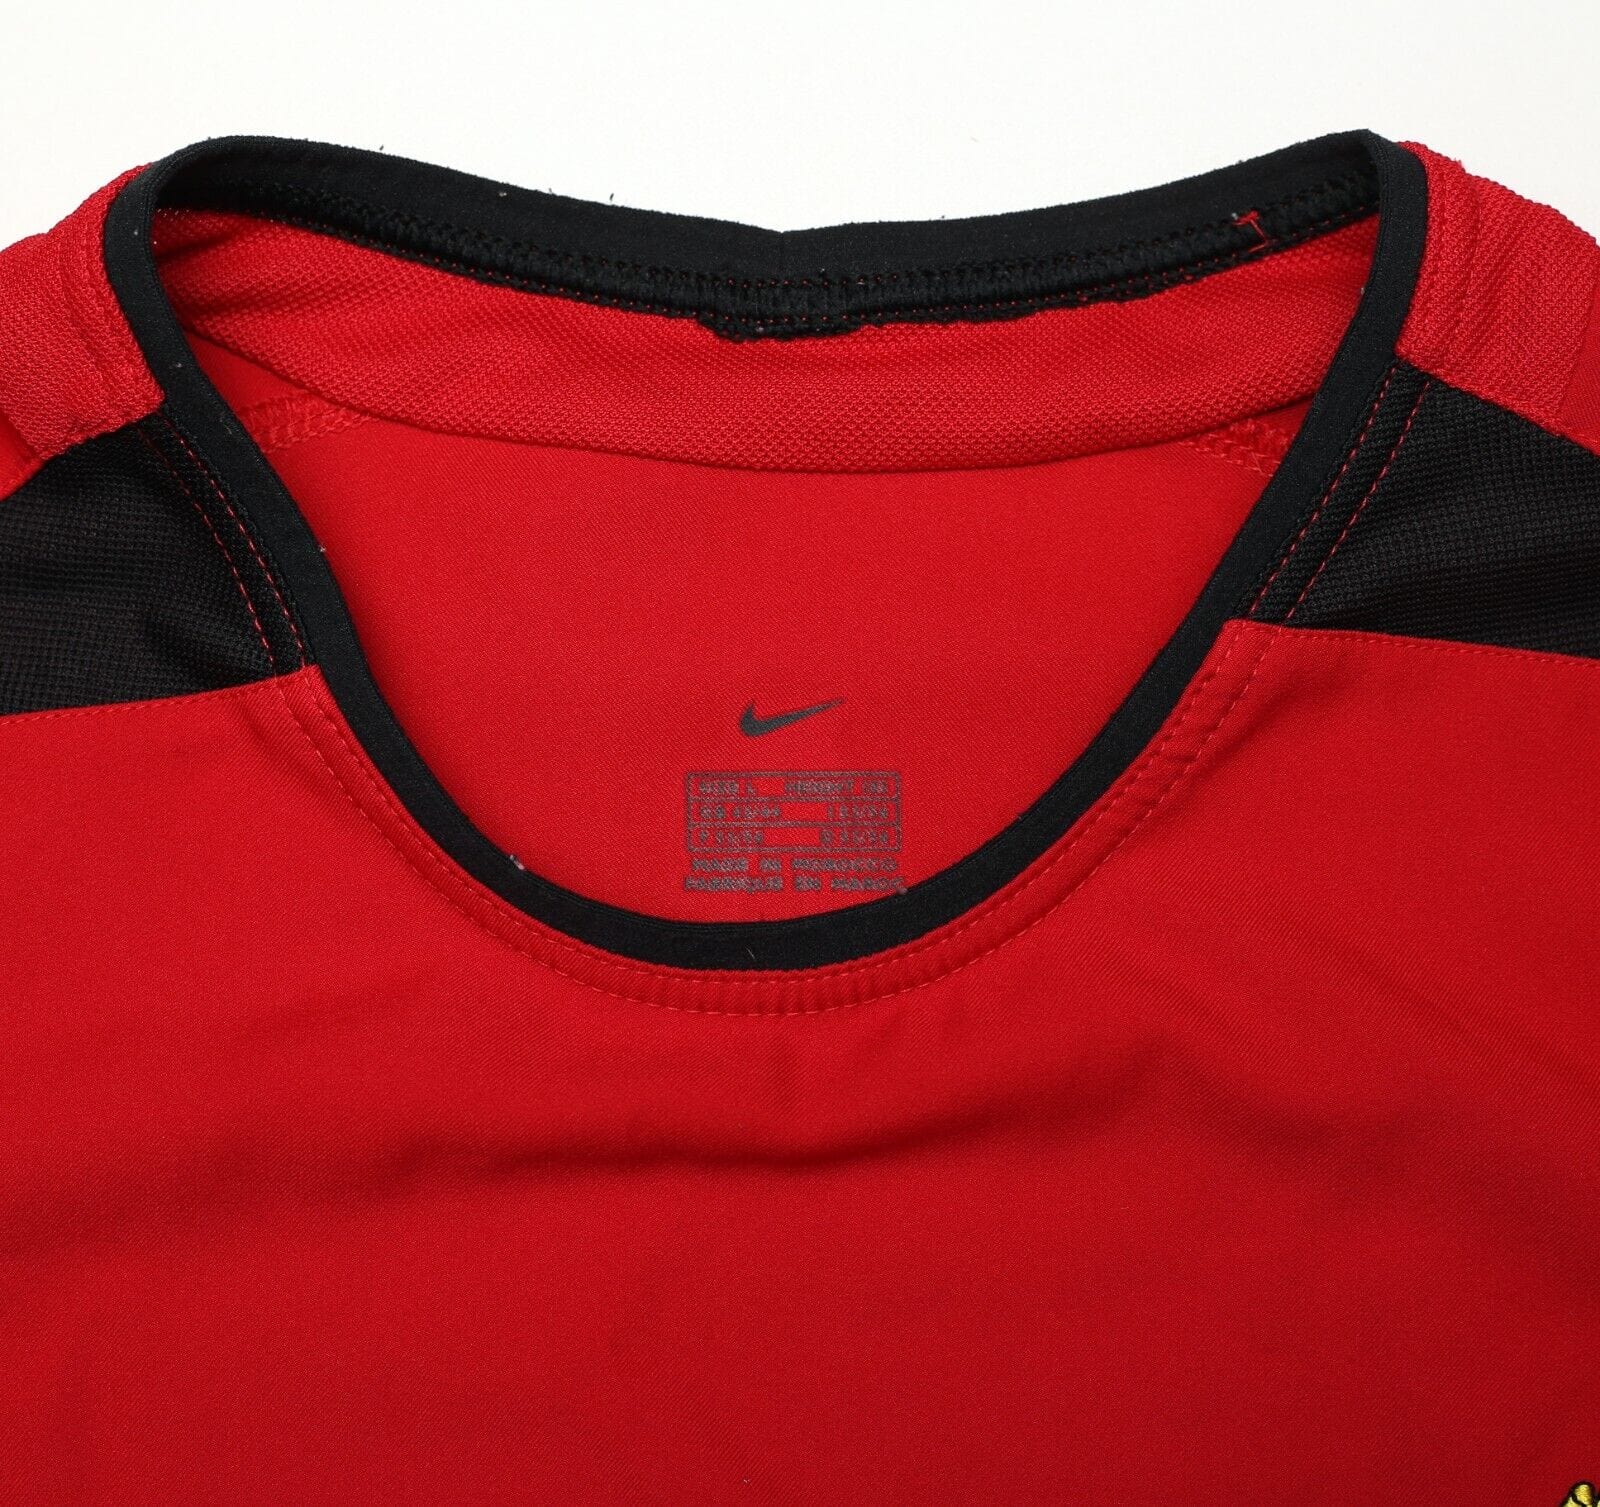 2002/04 RONALDO #7 Manchester United Vintage Nike Home Football Shirt (L)